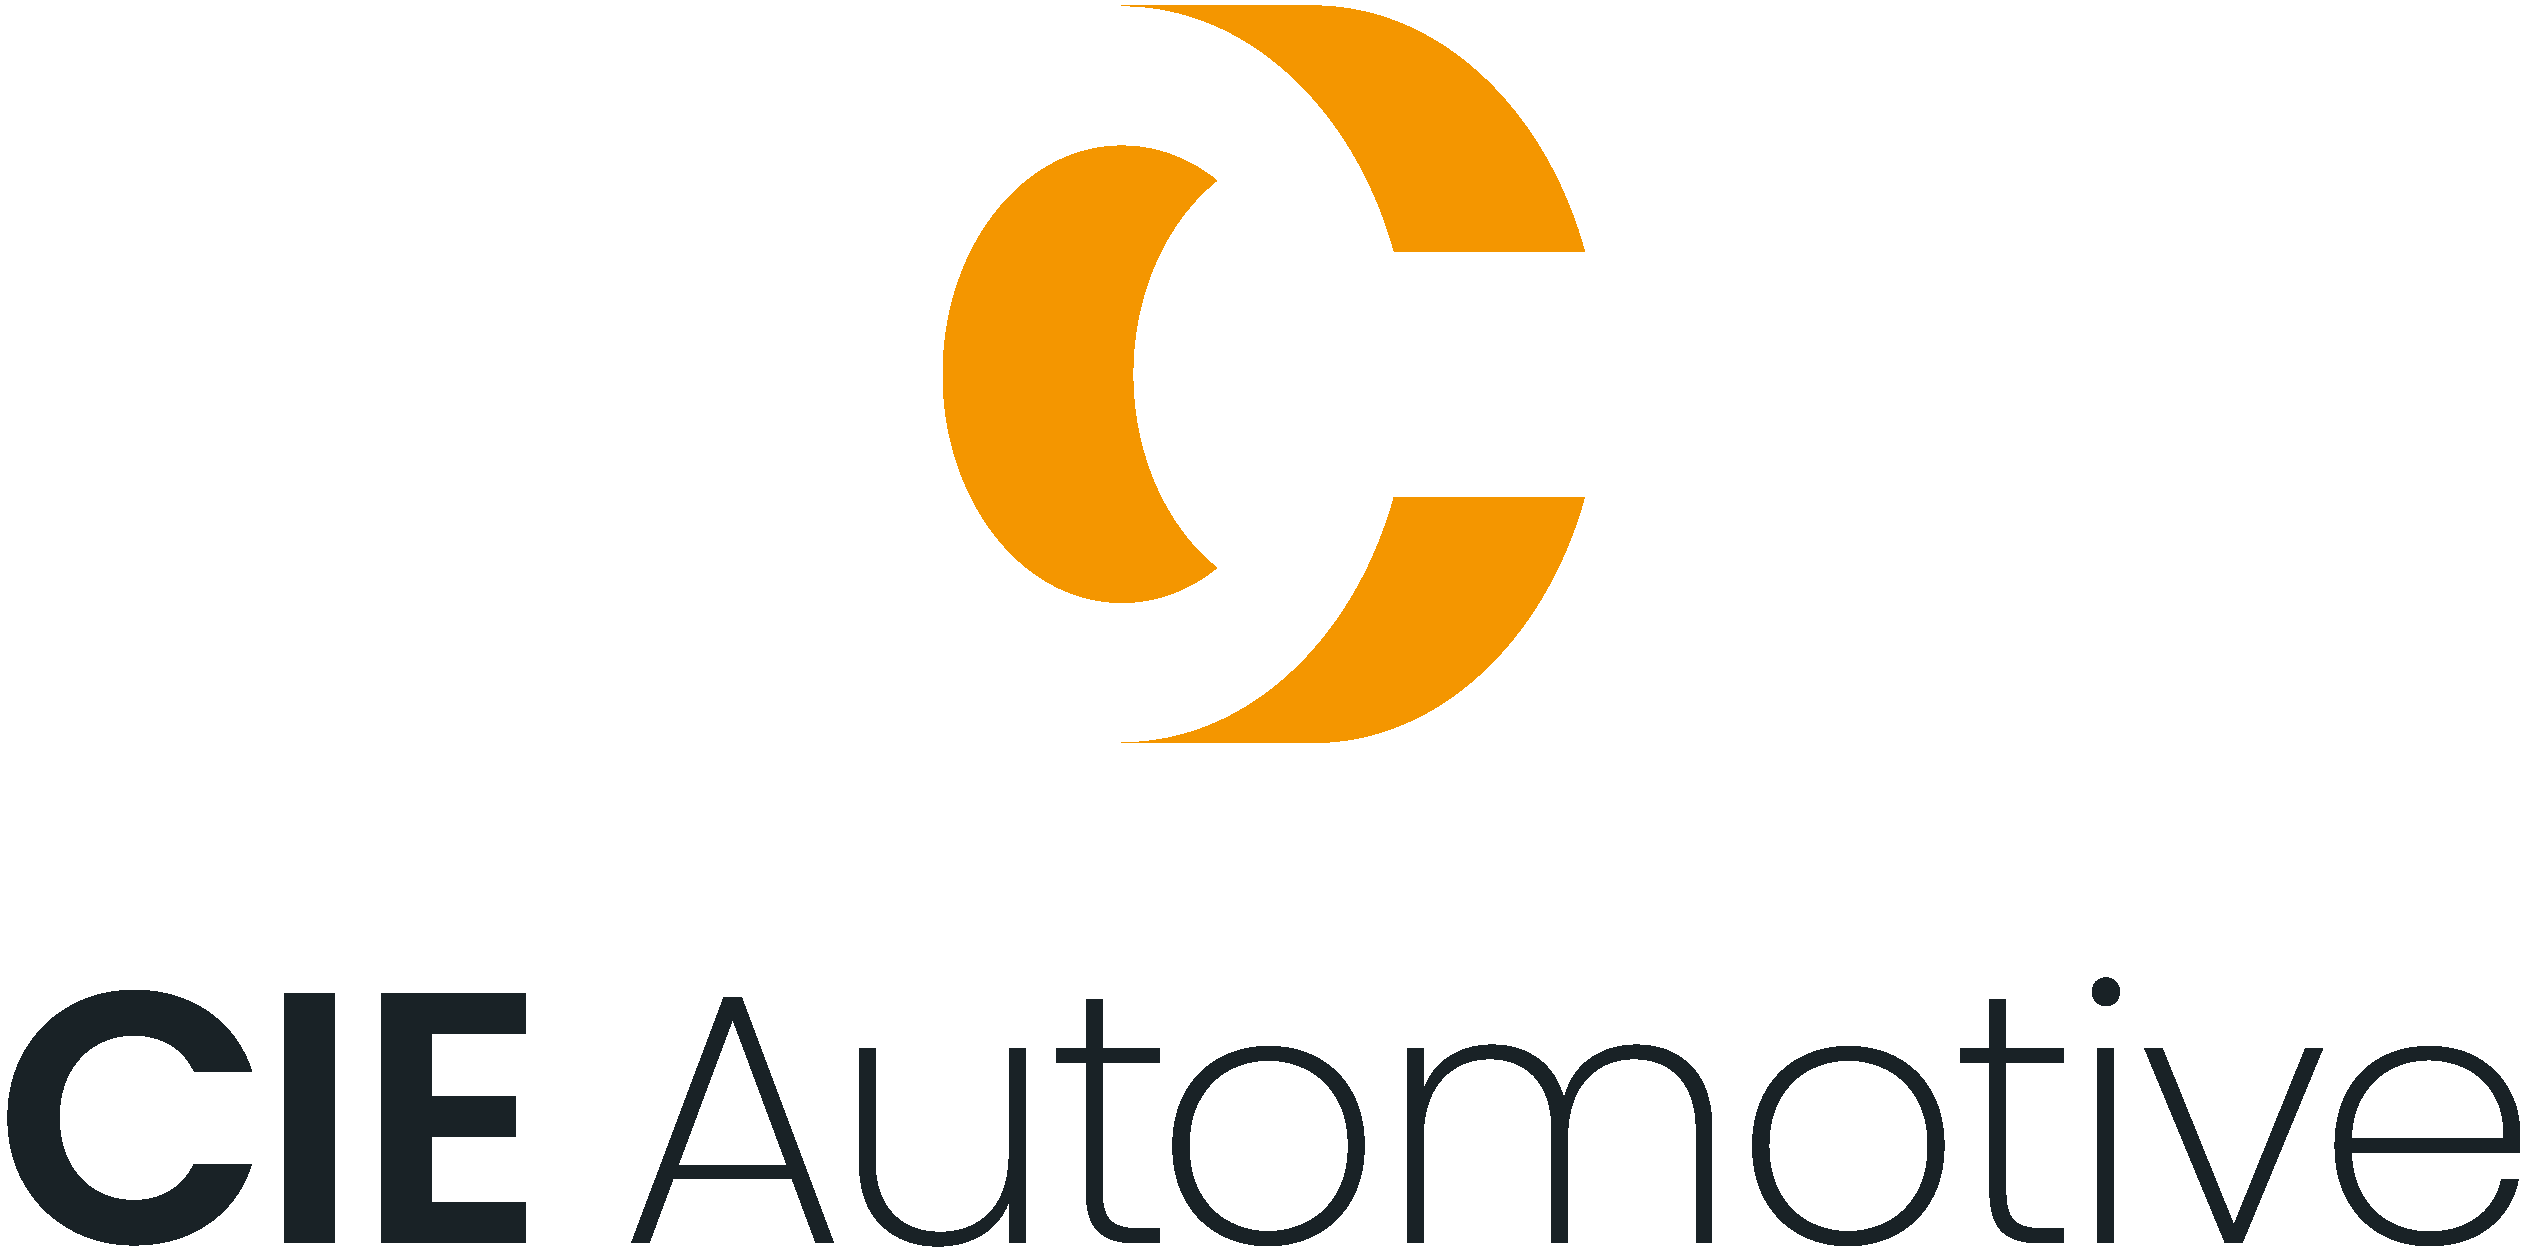 Cie Automotive (germany Forging Business)